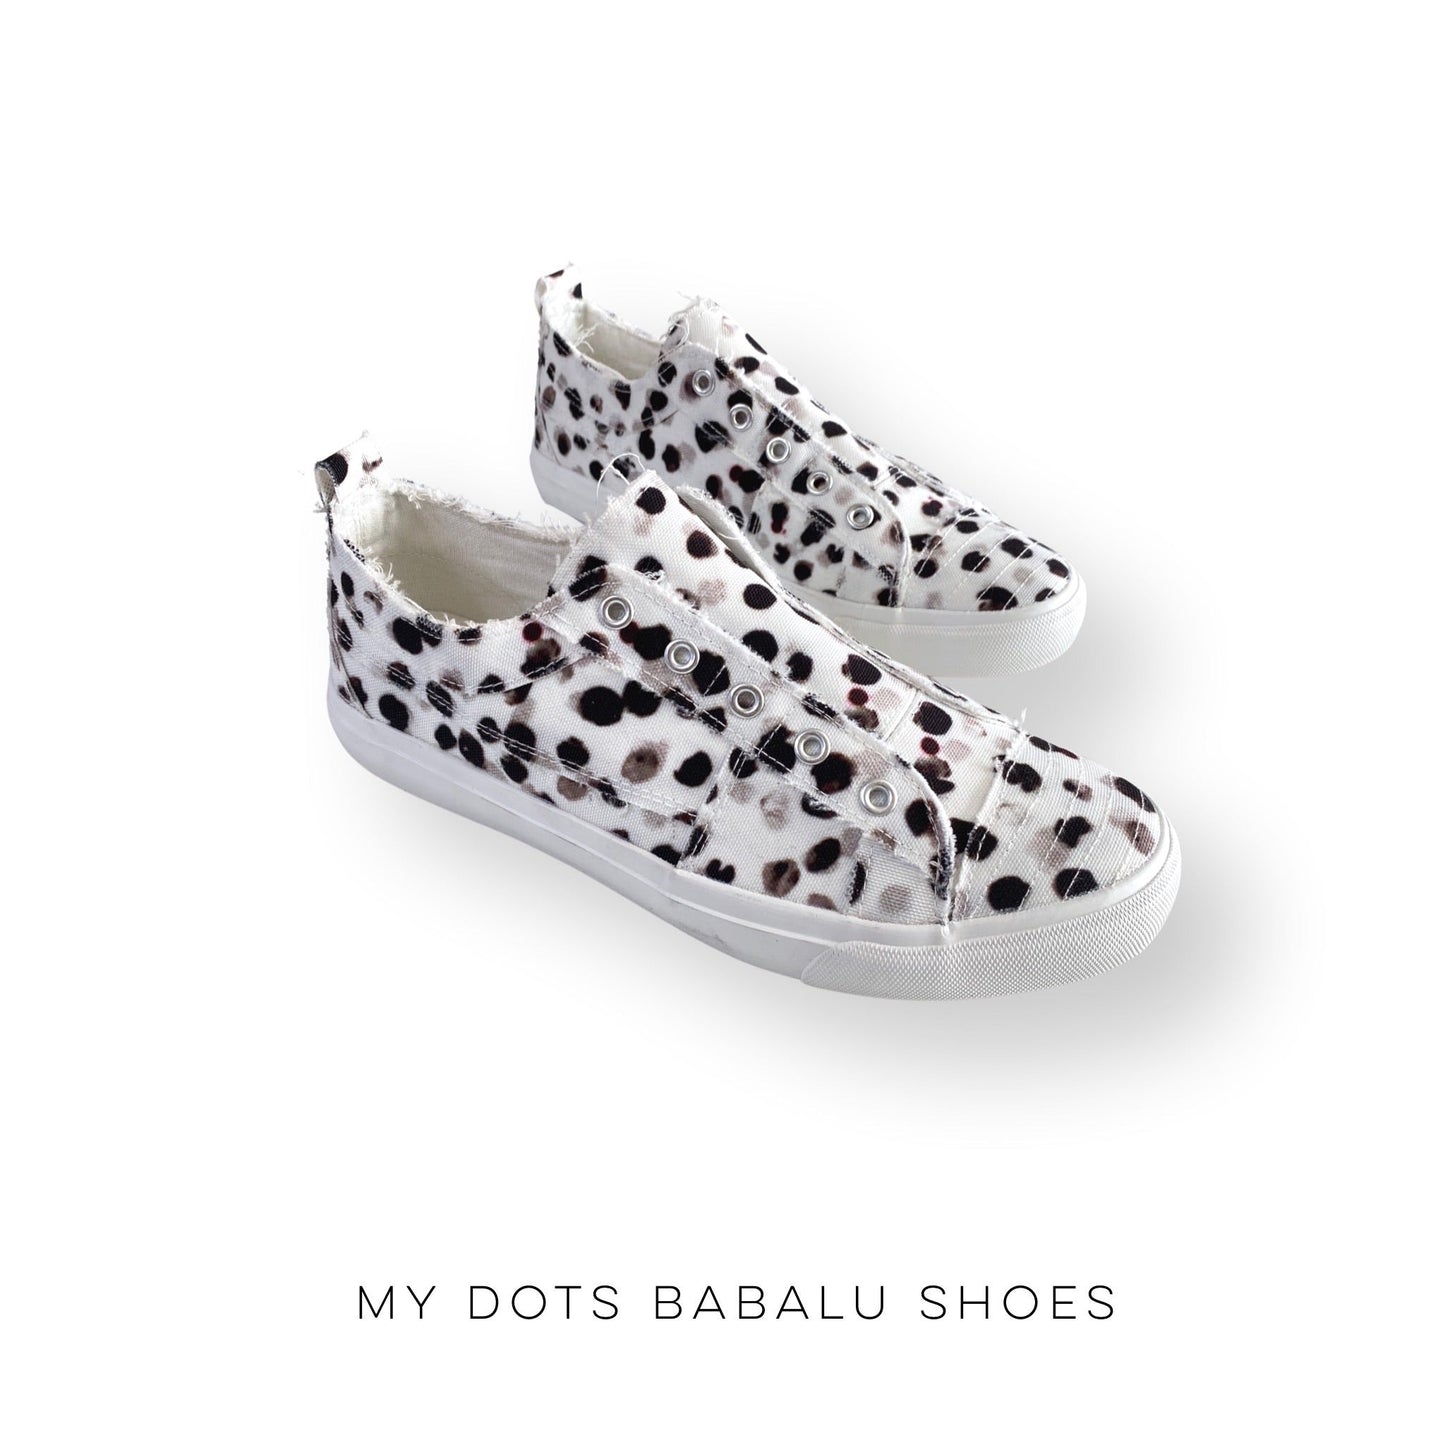 My Dots Babalu Shoes